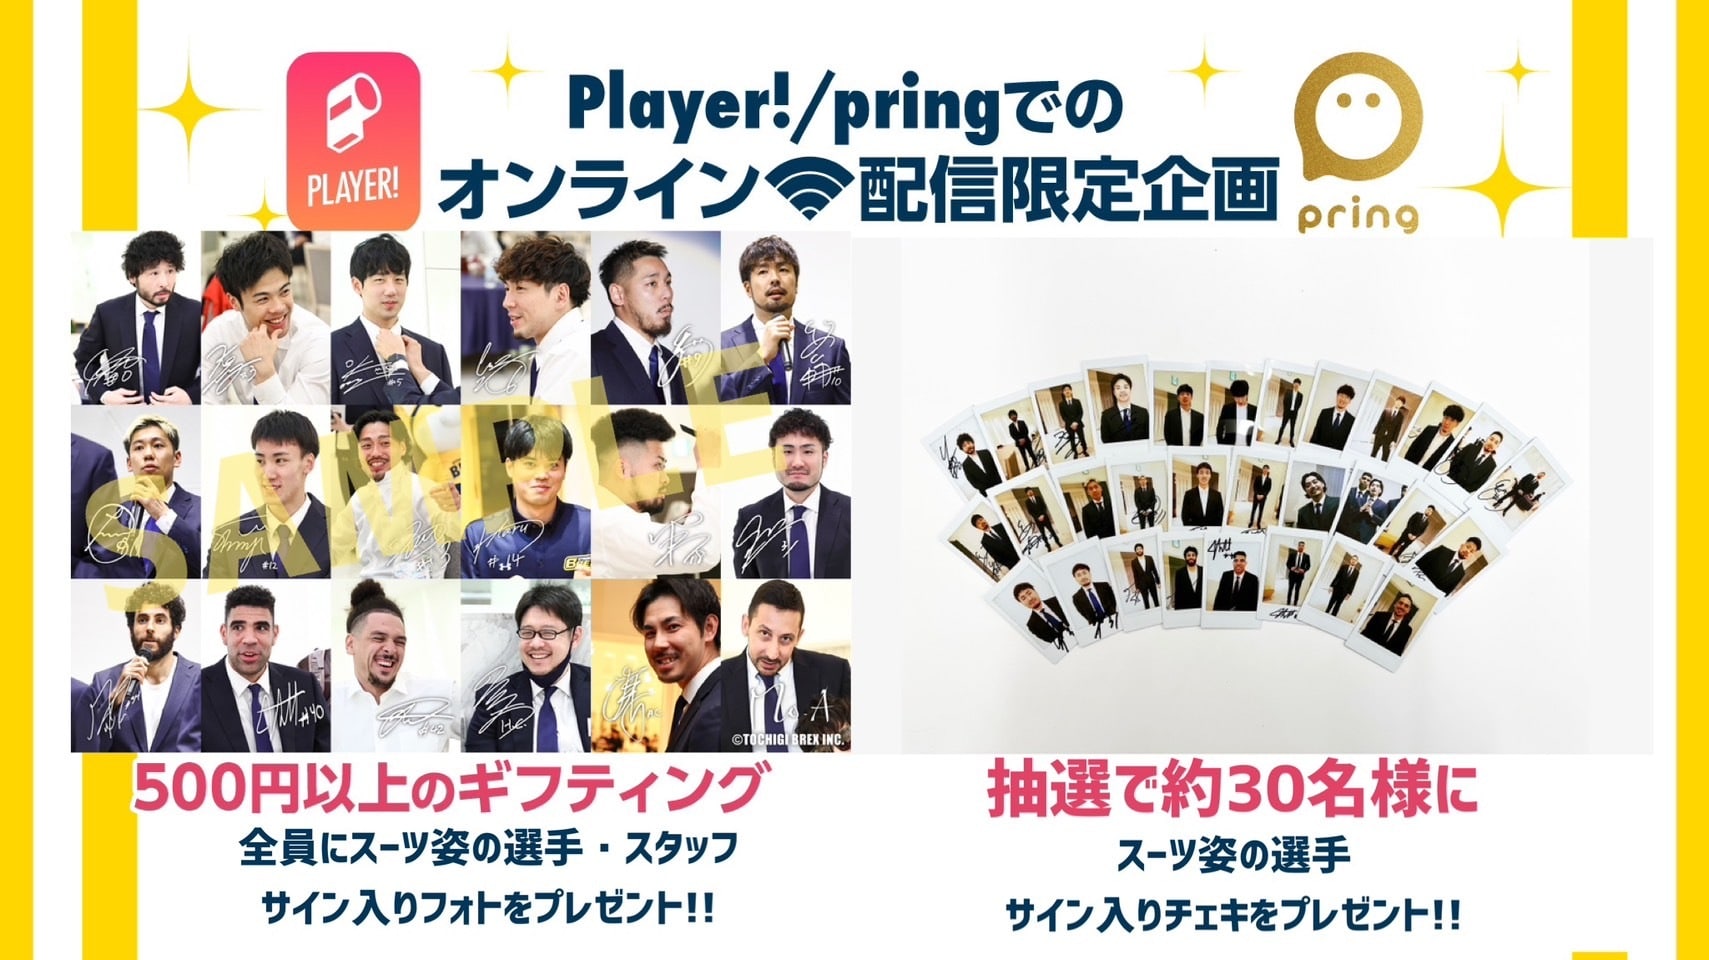 Player!・pring 配信限定 ギフティングプレゼント企画